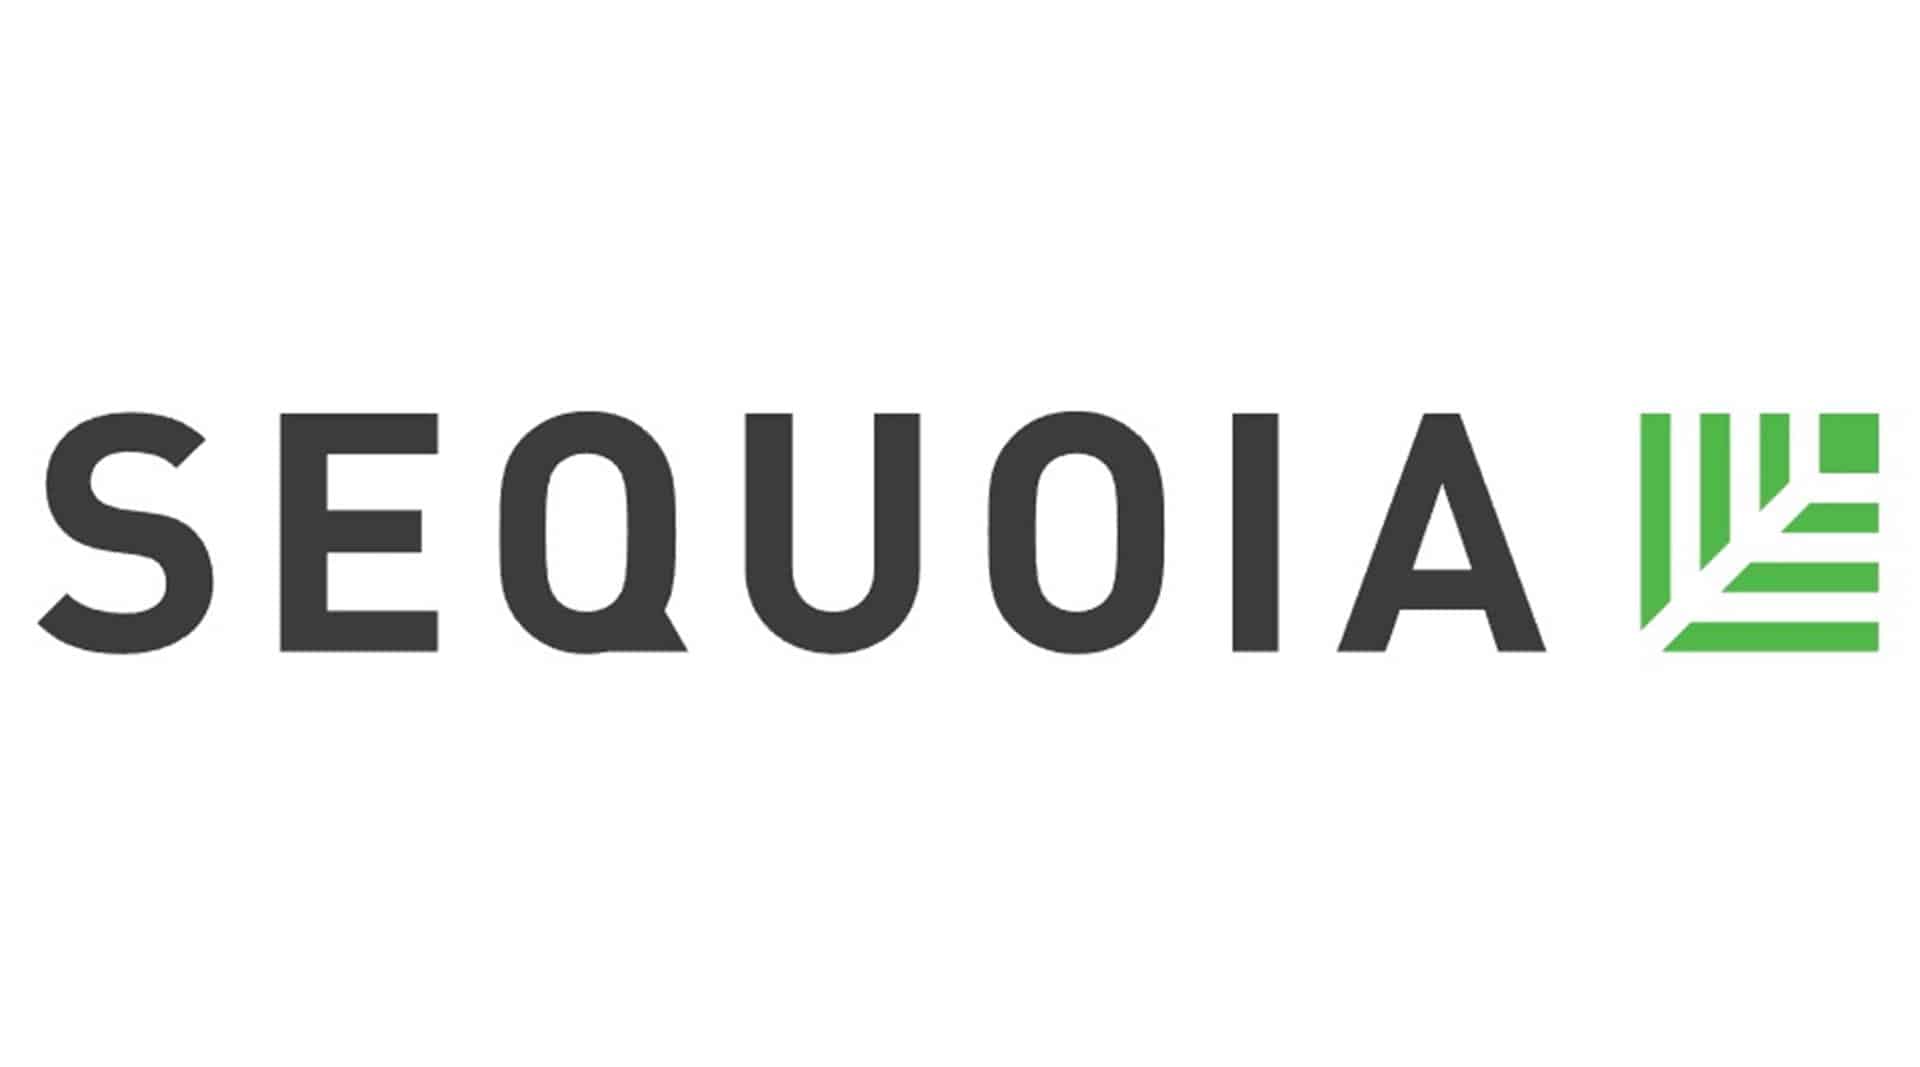 Meta welcomes Sequoia India to their VC brand incubator initiative